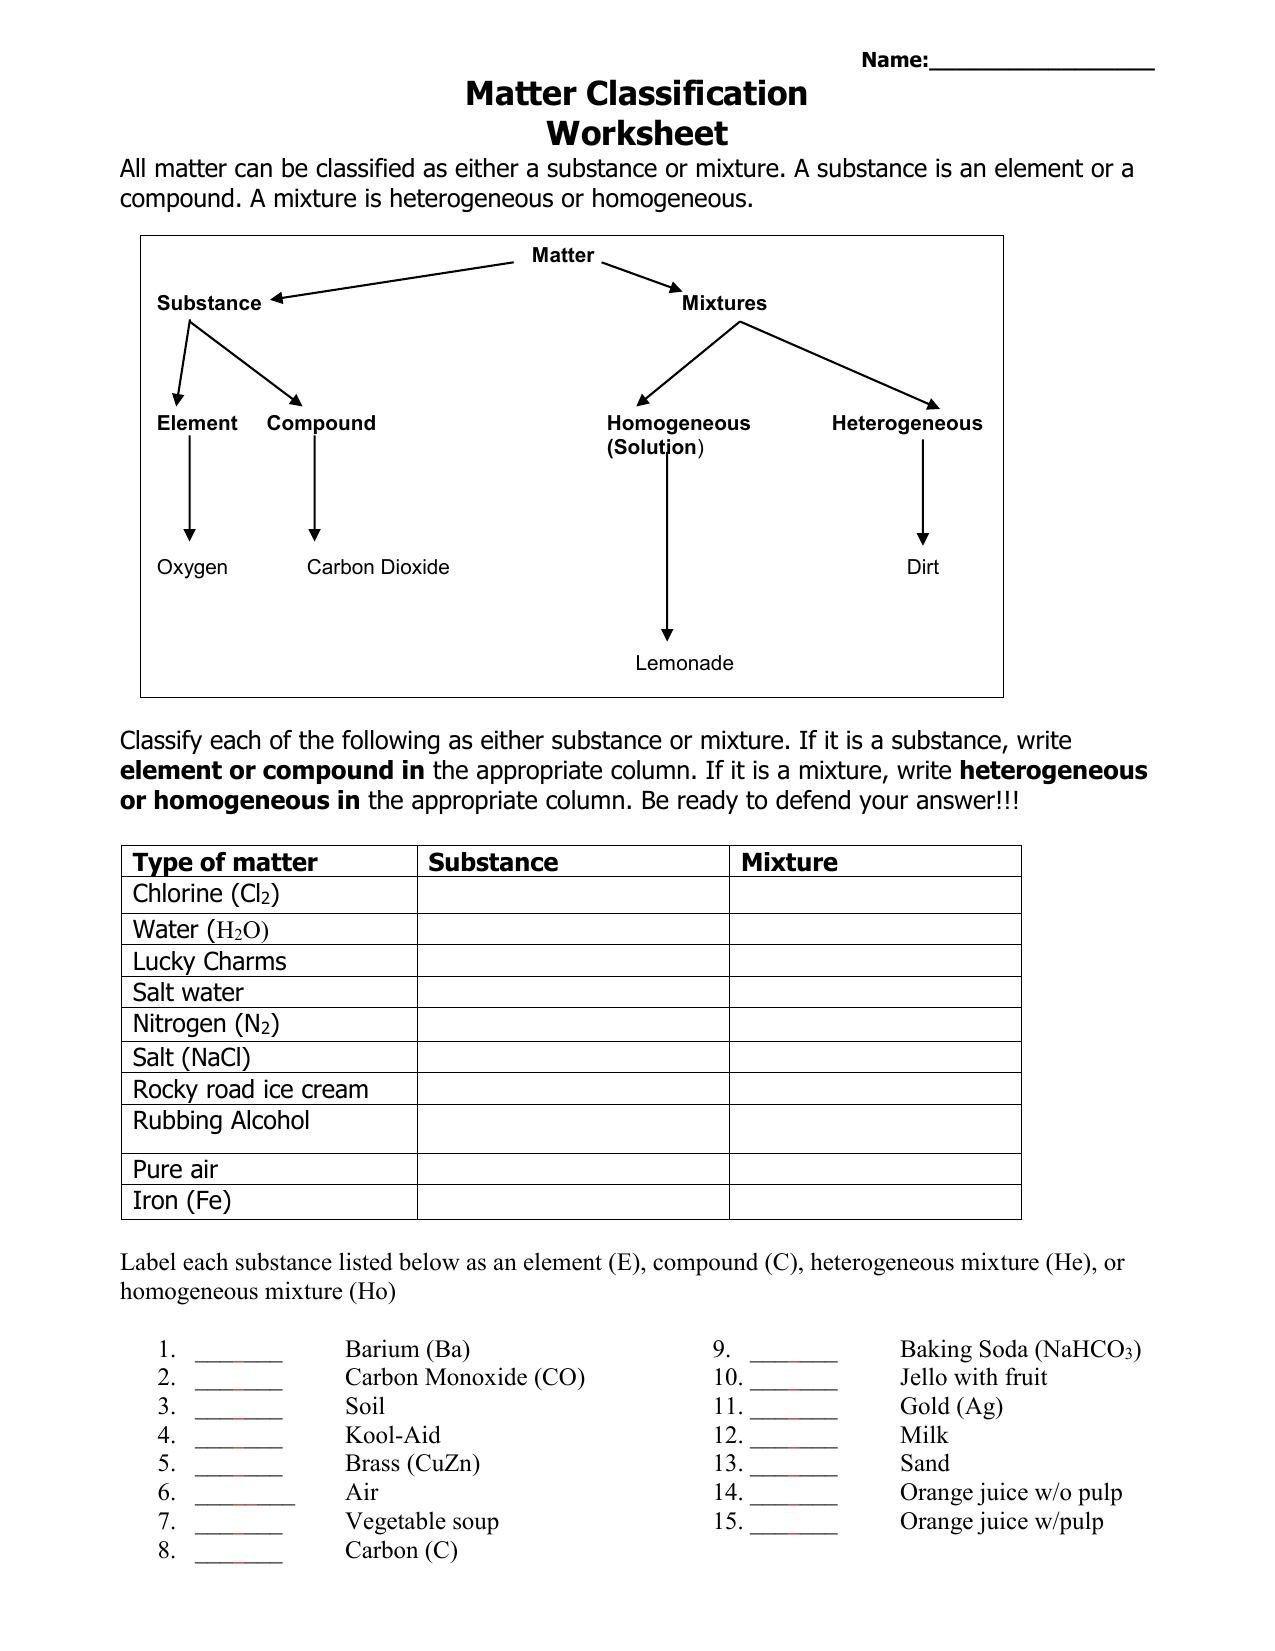 Matter Classification Worksheet For Worksheet Classification Of Matter